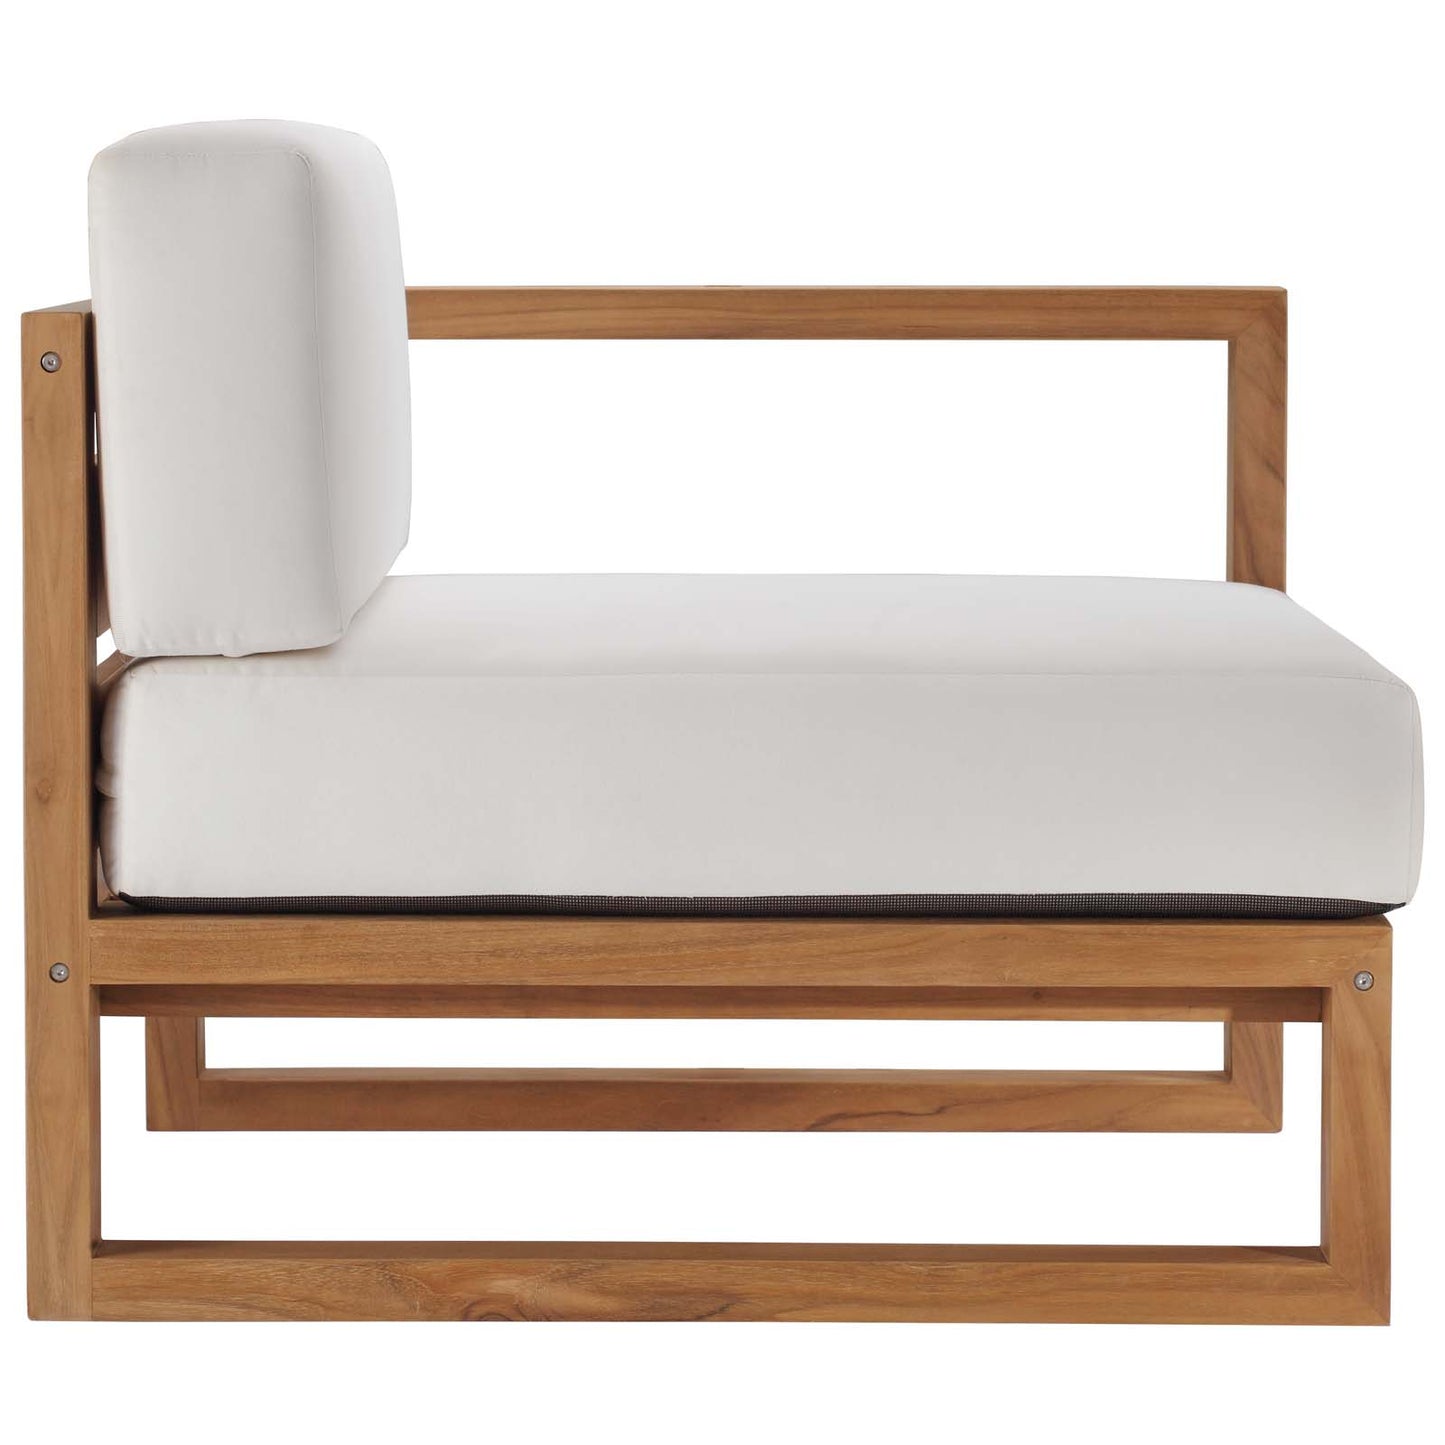 Upland Outdoor Patio Teak Wood 3-Piece Sectional Sofa Set Natural White EEI-4254-NAT-WHI-SET